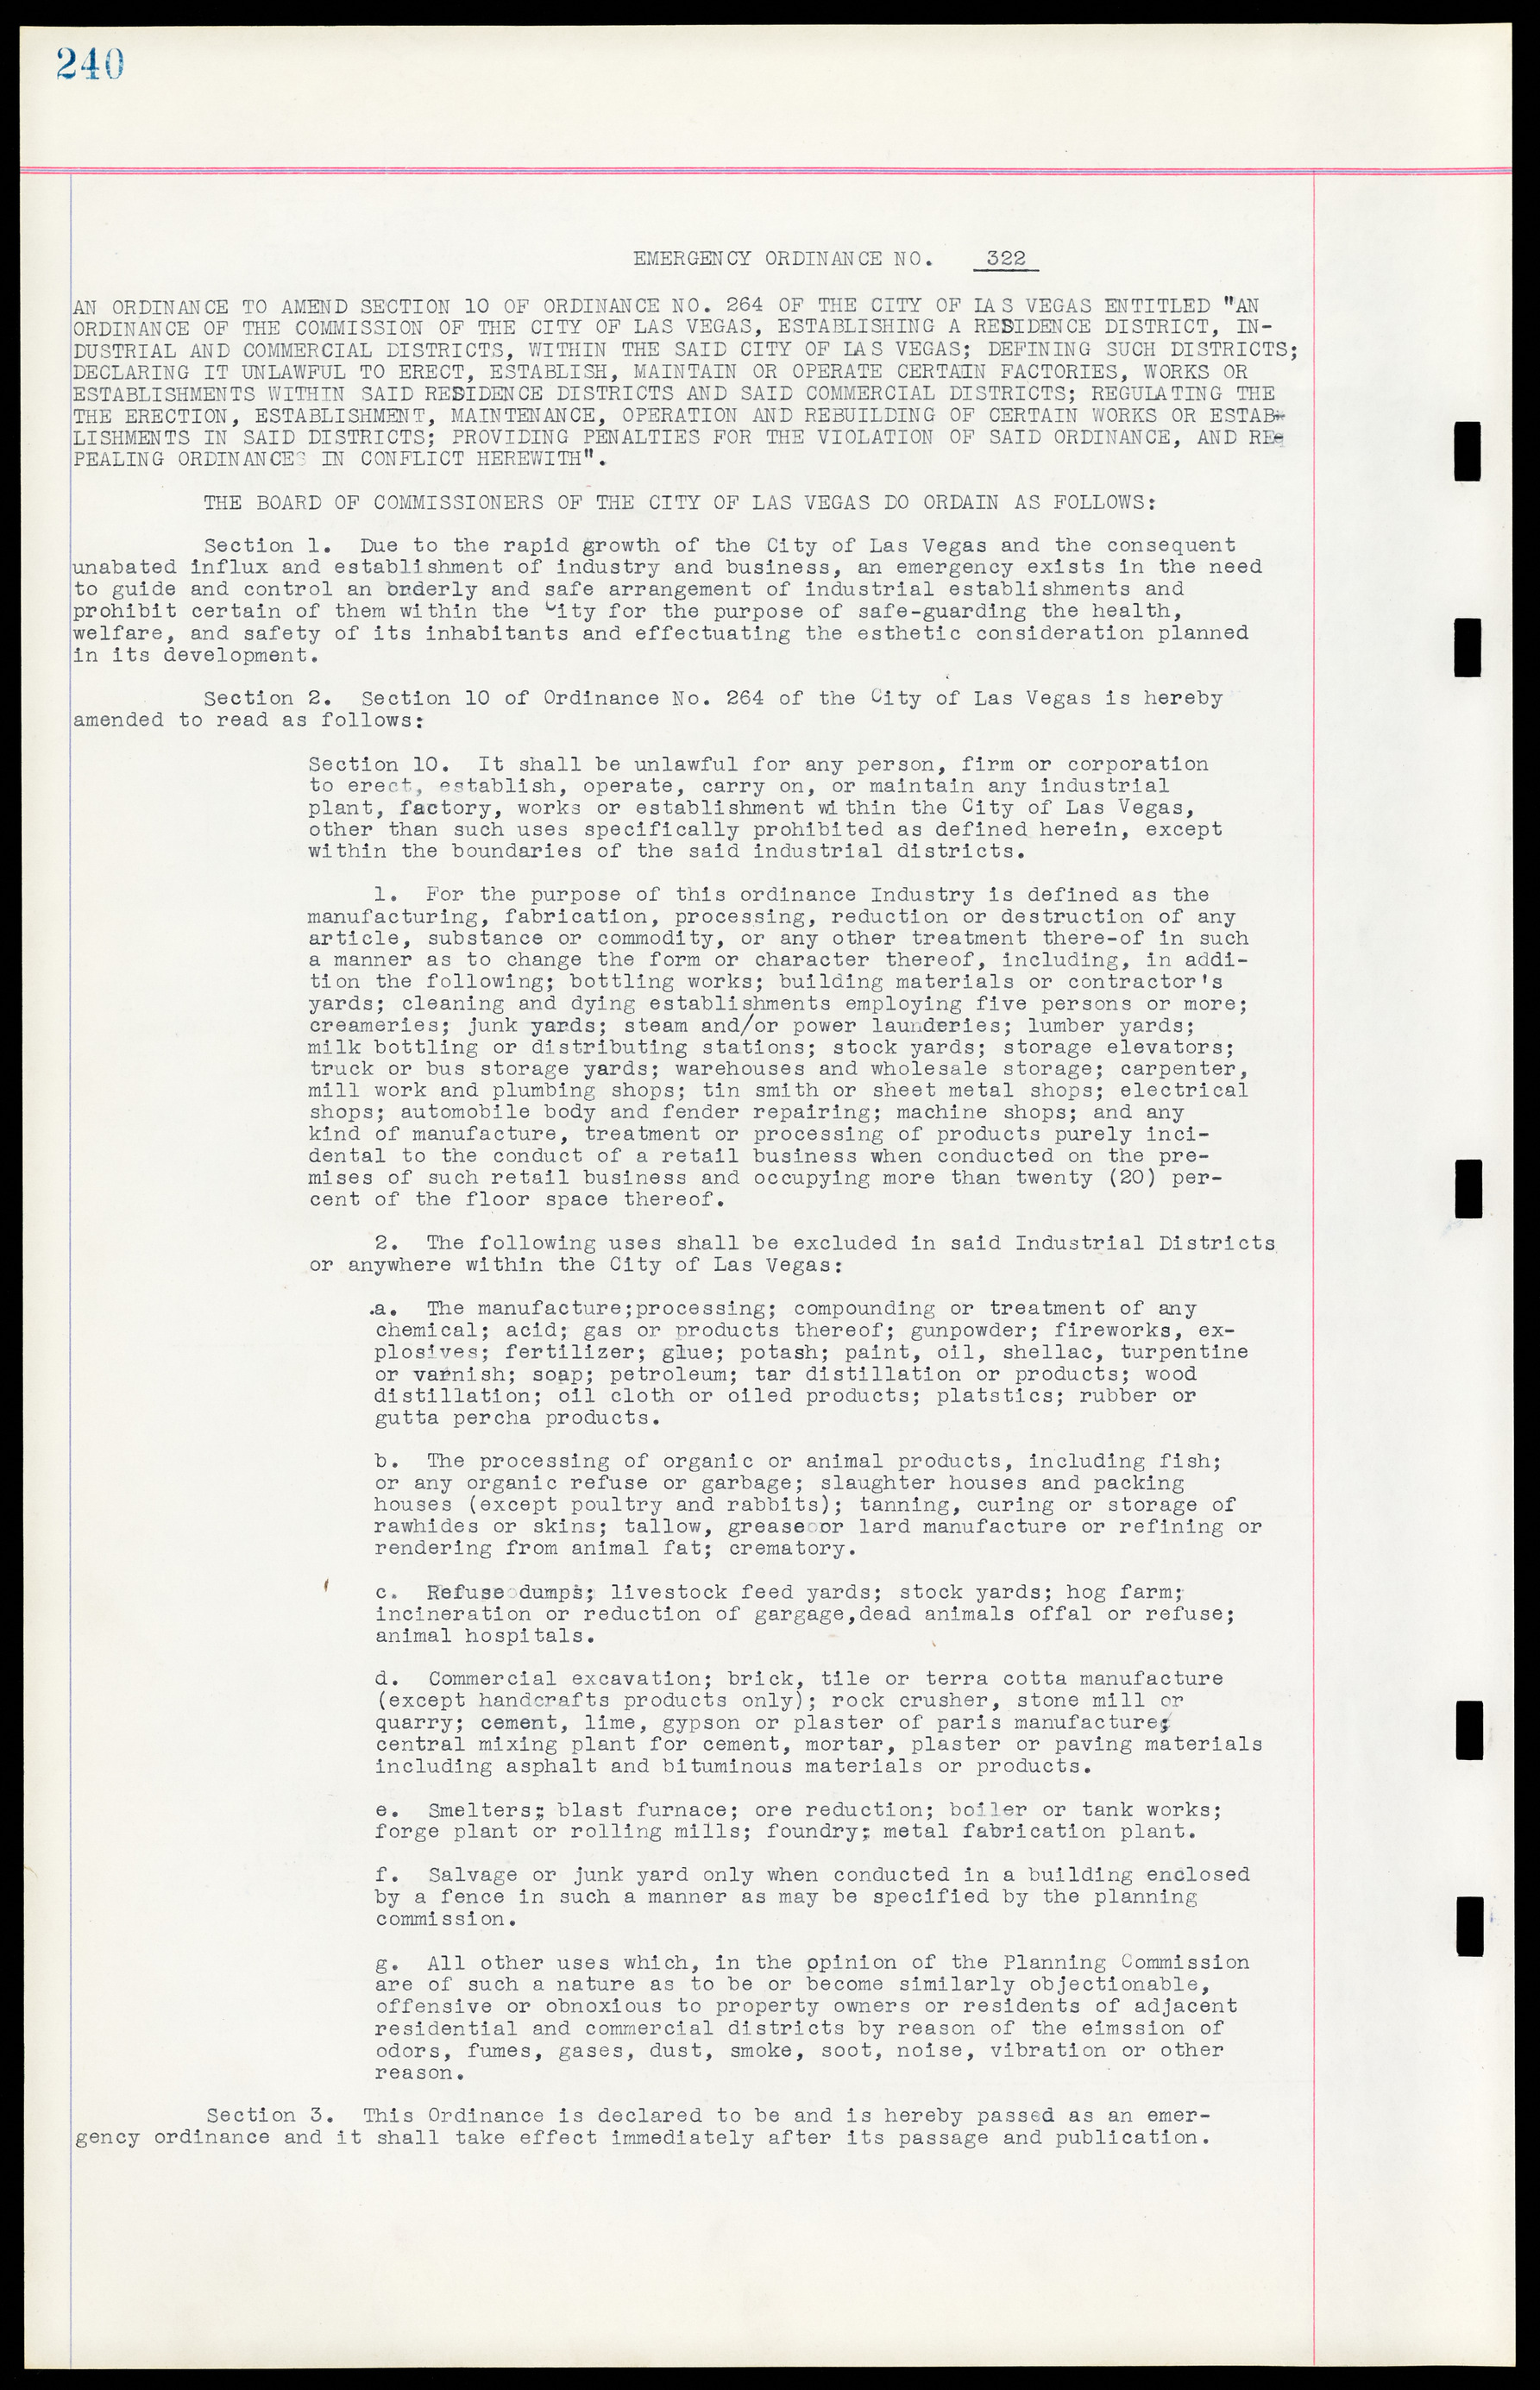 Las Vegas City Ordinances, March 31, 1933 to October 25, 1950, lvc000014-269